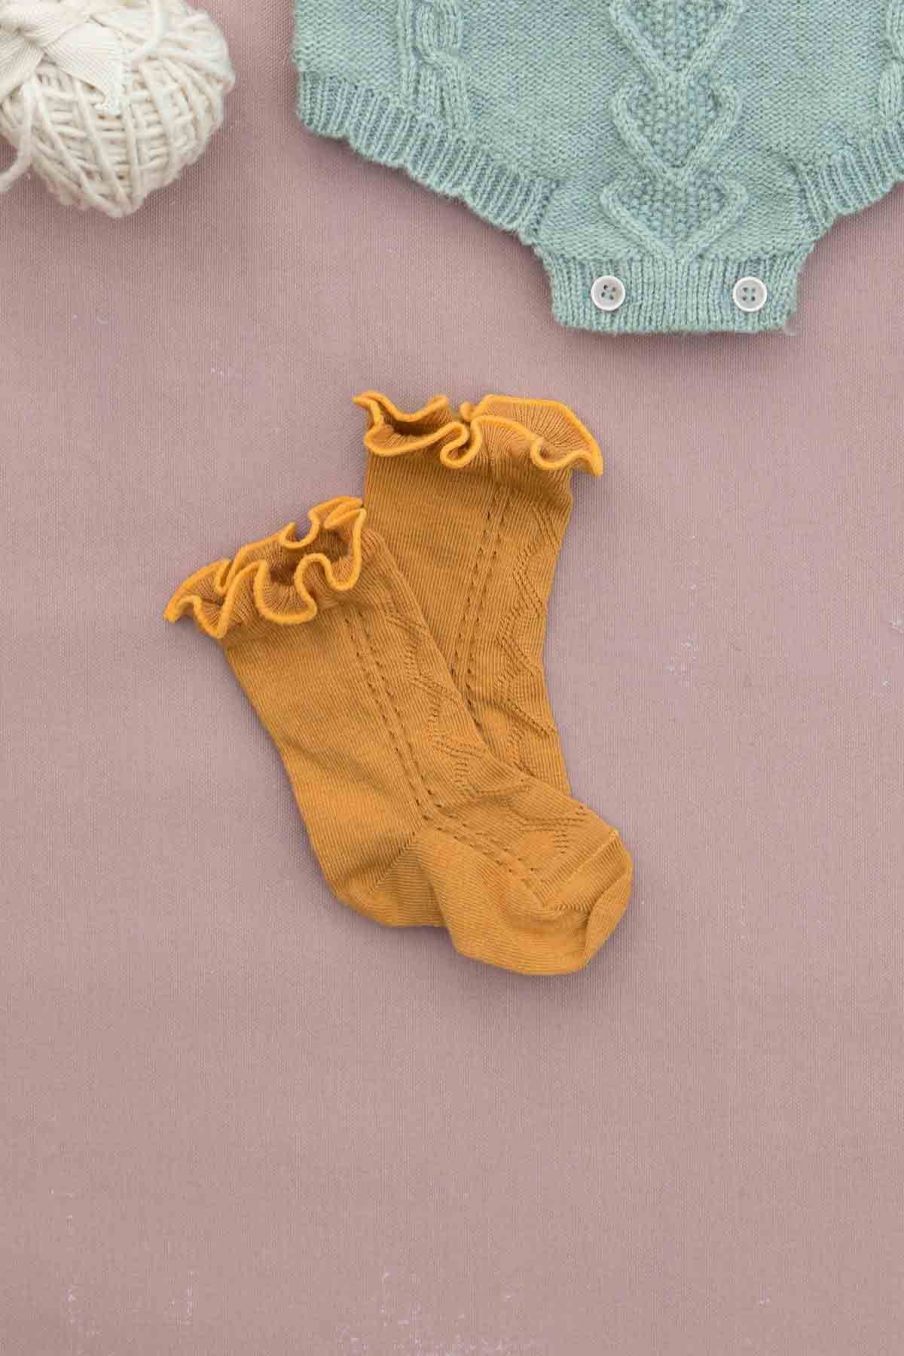 chaussettes bebe fille chilou mustard - louise misha